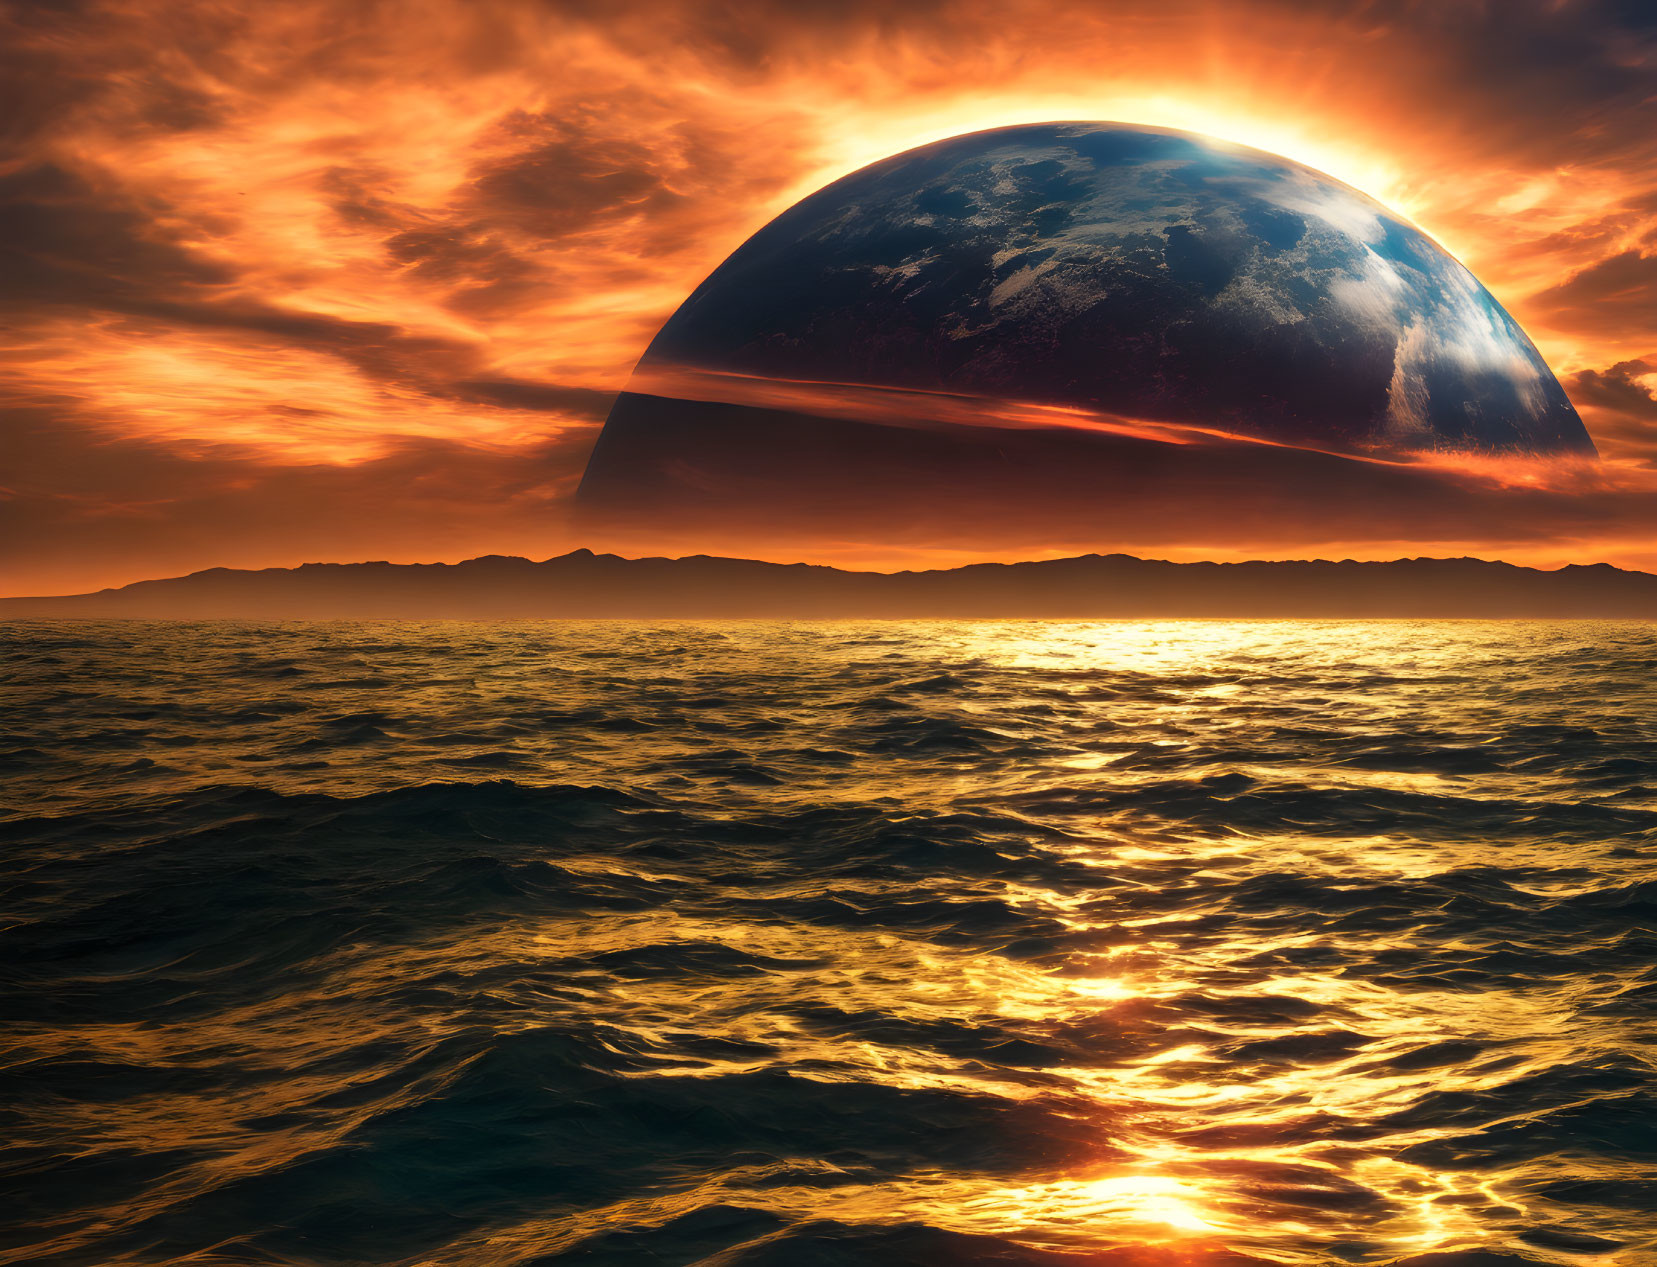 Alien planet in fiery sunset sky over vast ocean